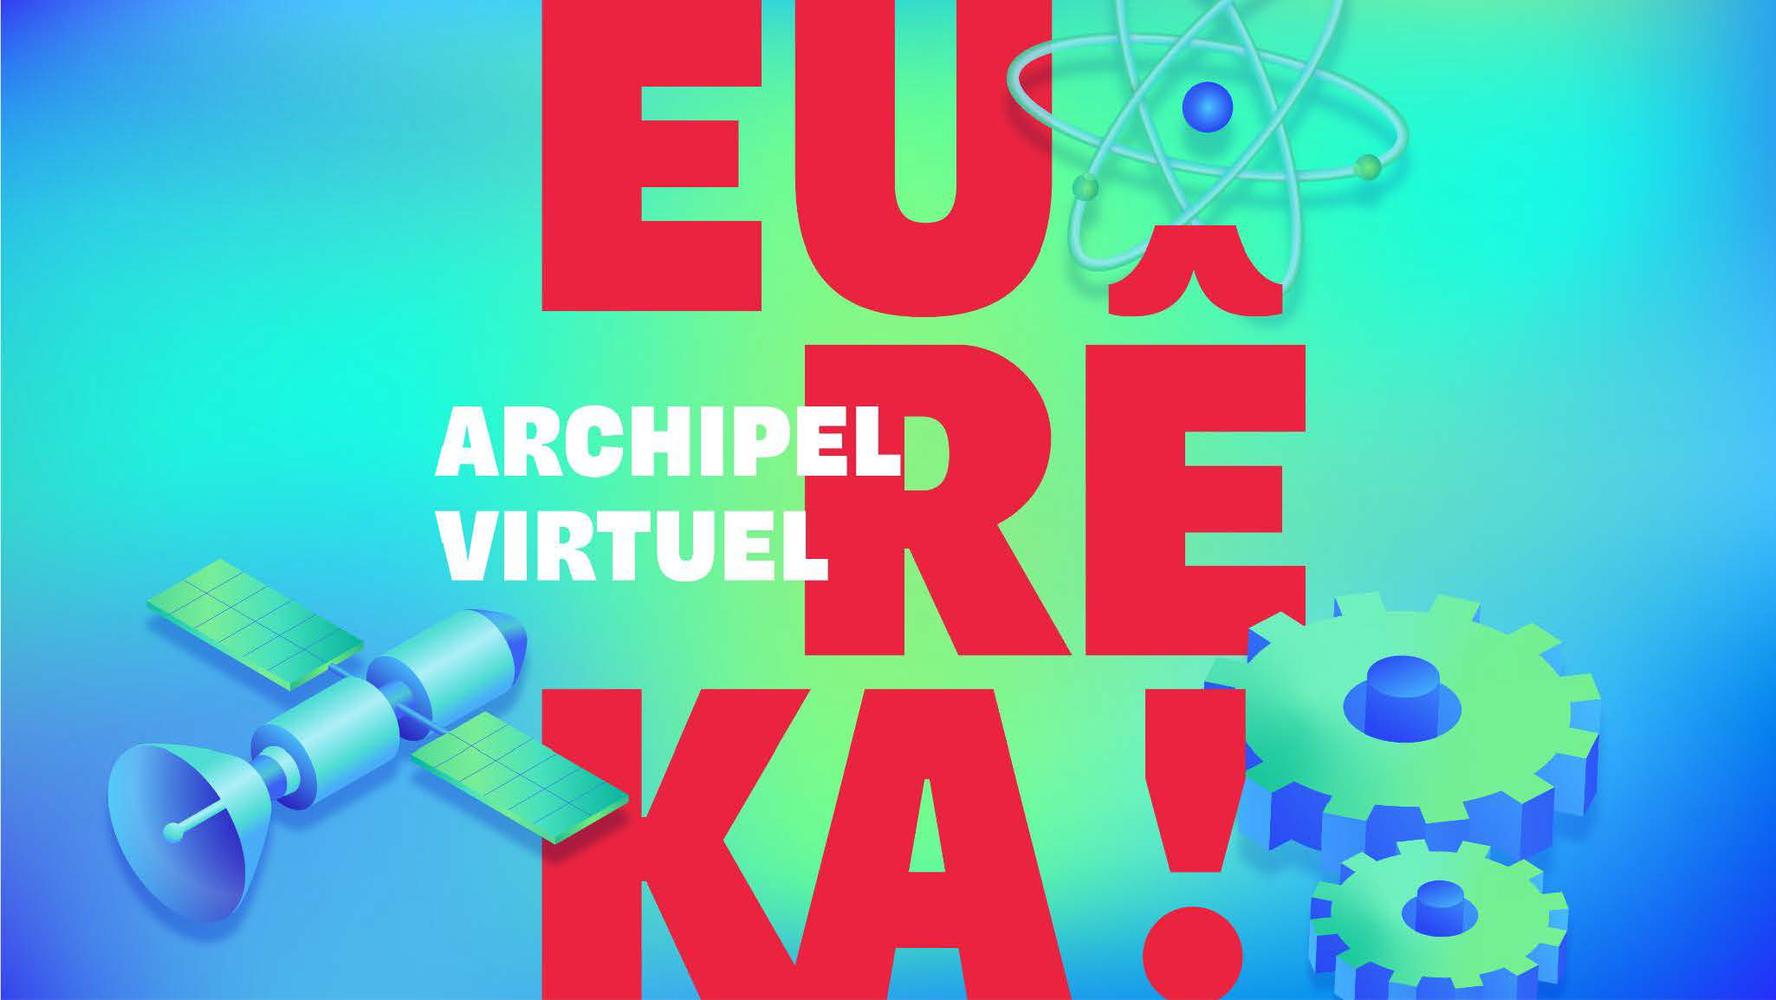 The Virtual EUREKA Festival